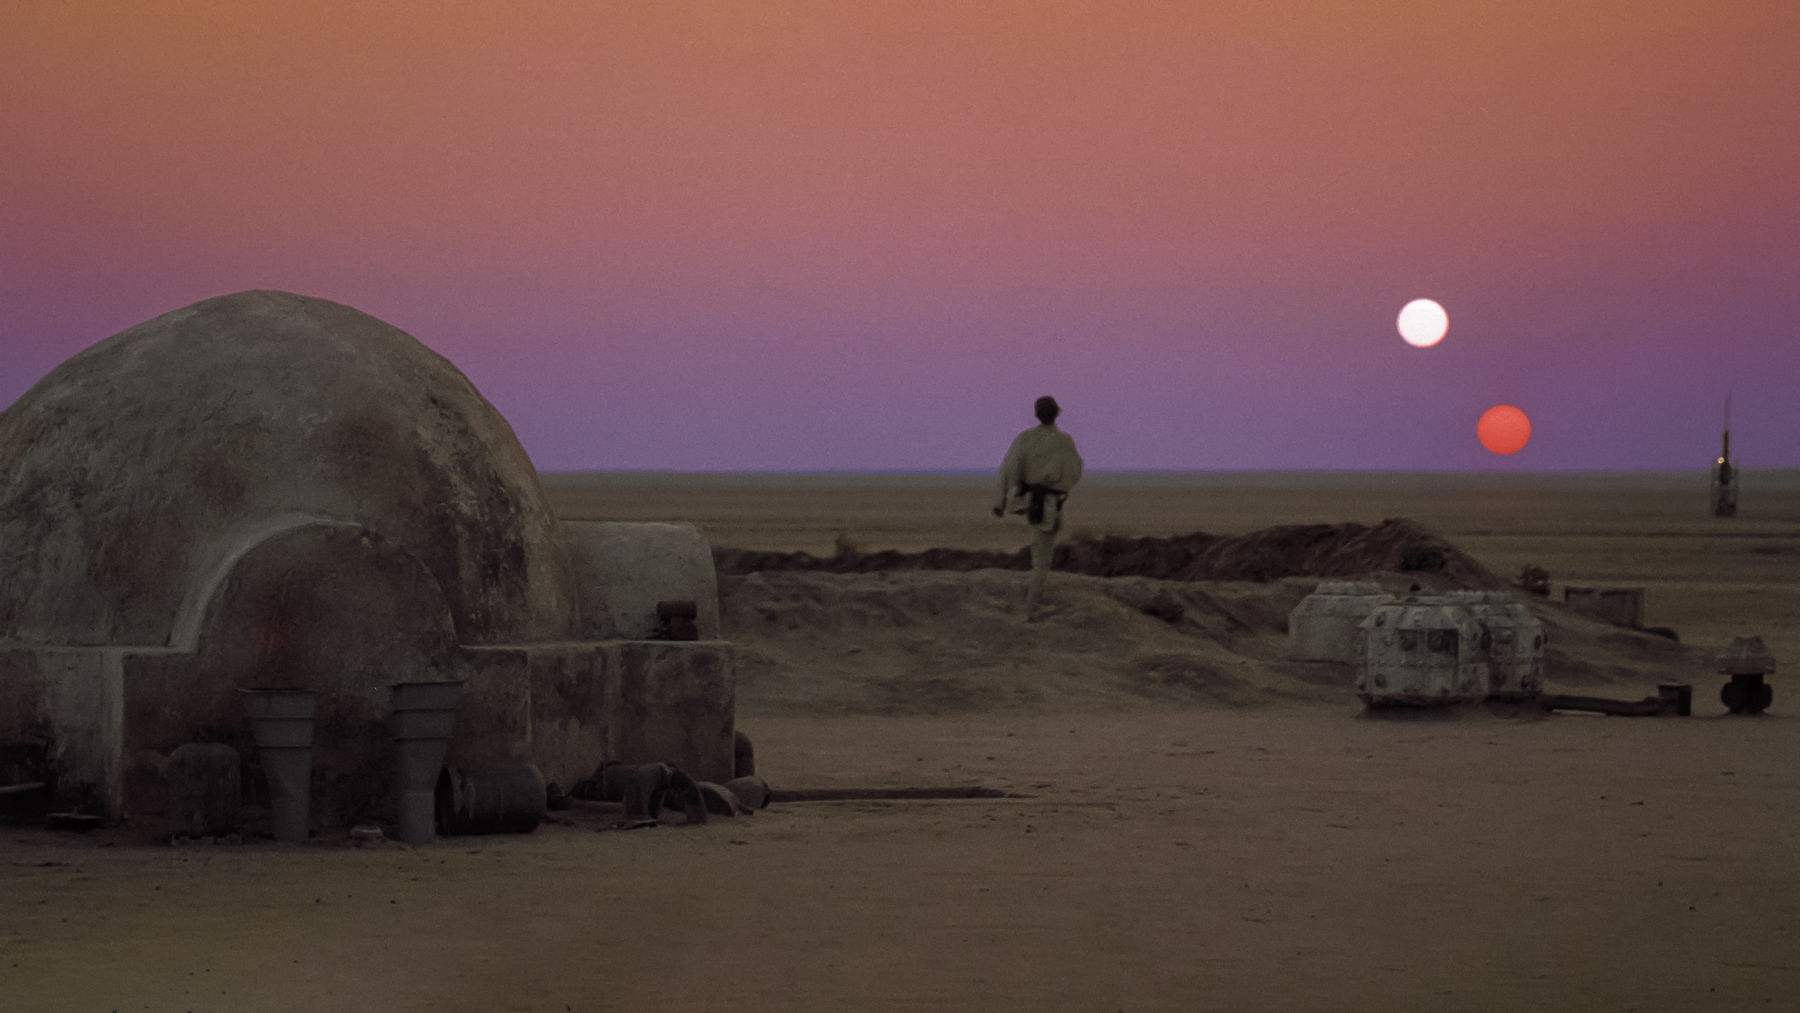 Tatooine, Anakin's homeworld